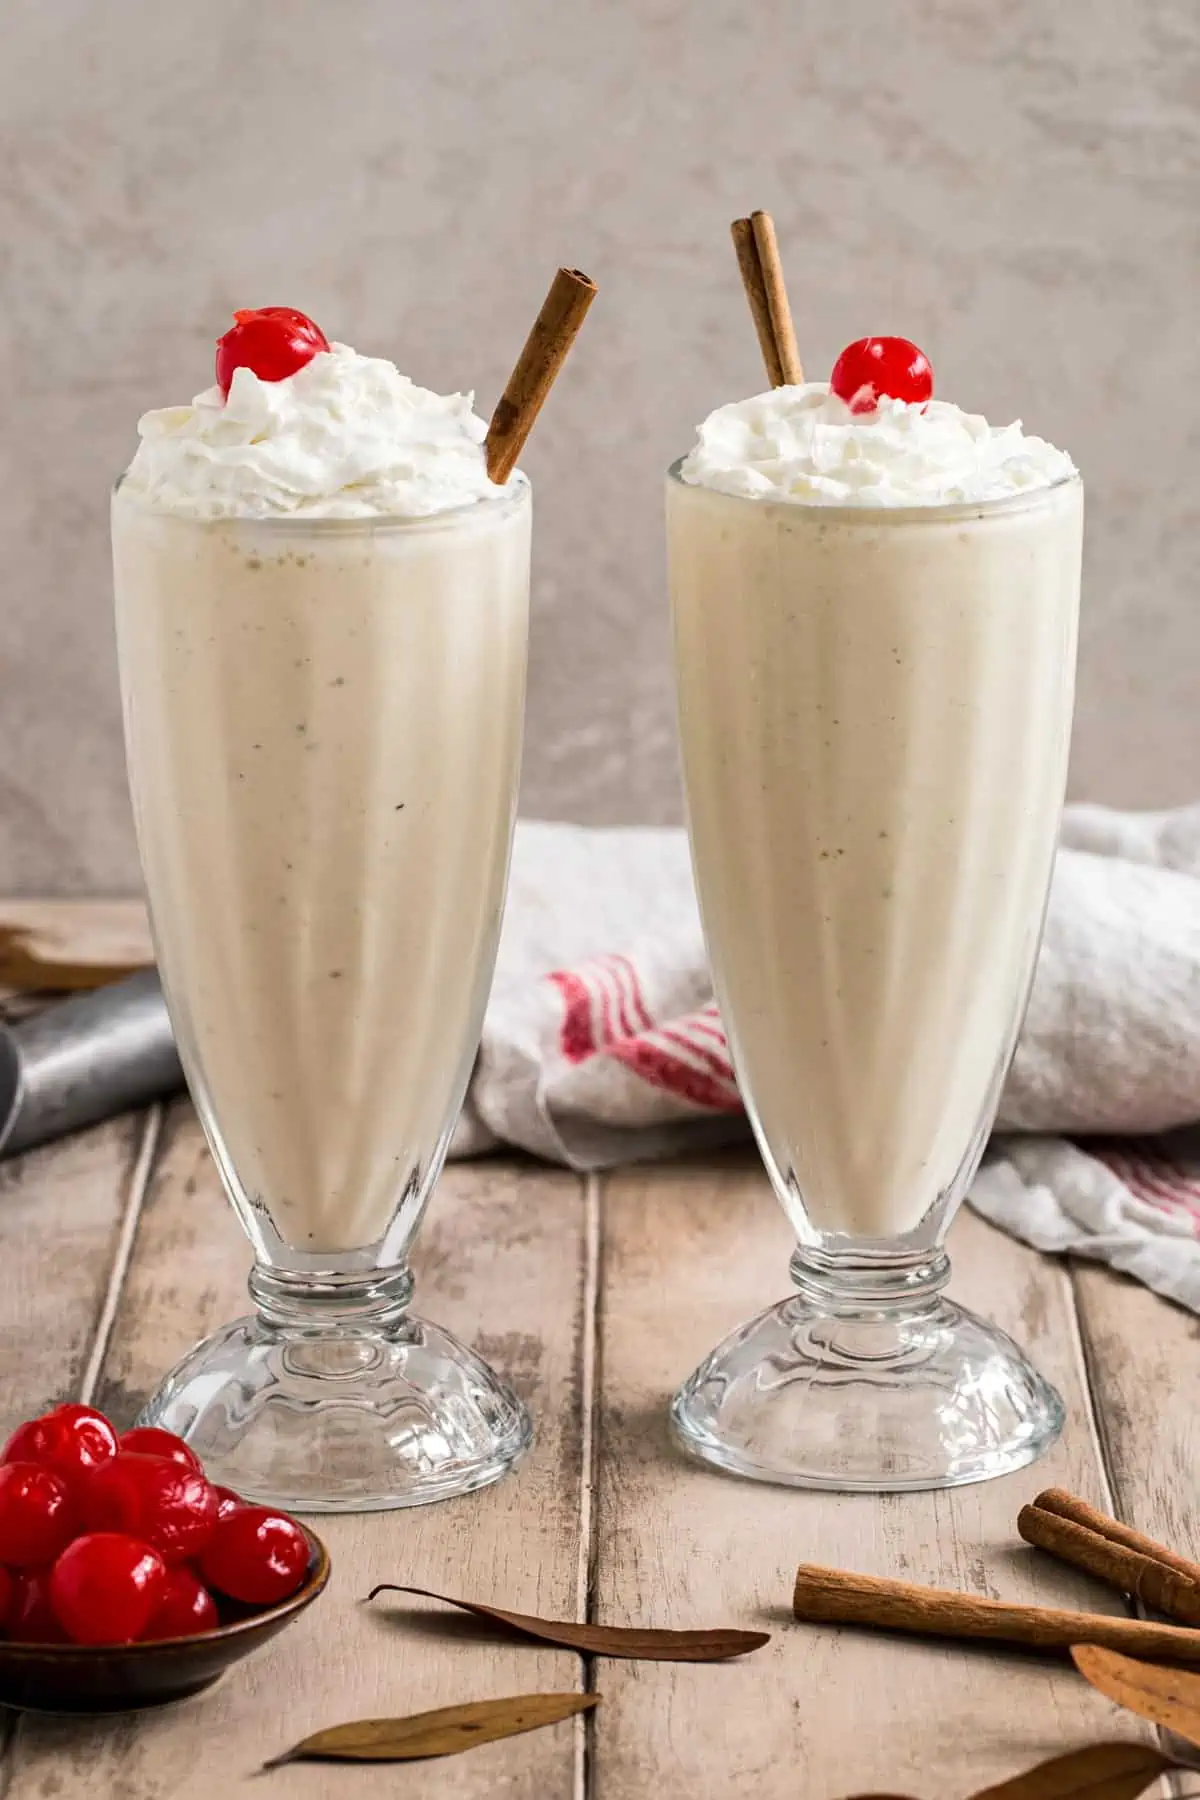 Eggnog milkshakes topped with whipped cream, cherries, and cinnamon sticks in a milkshake glass.